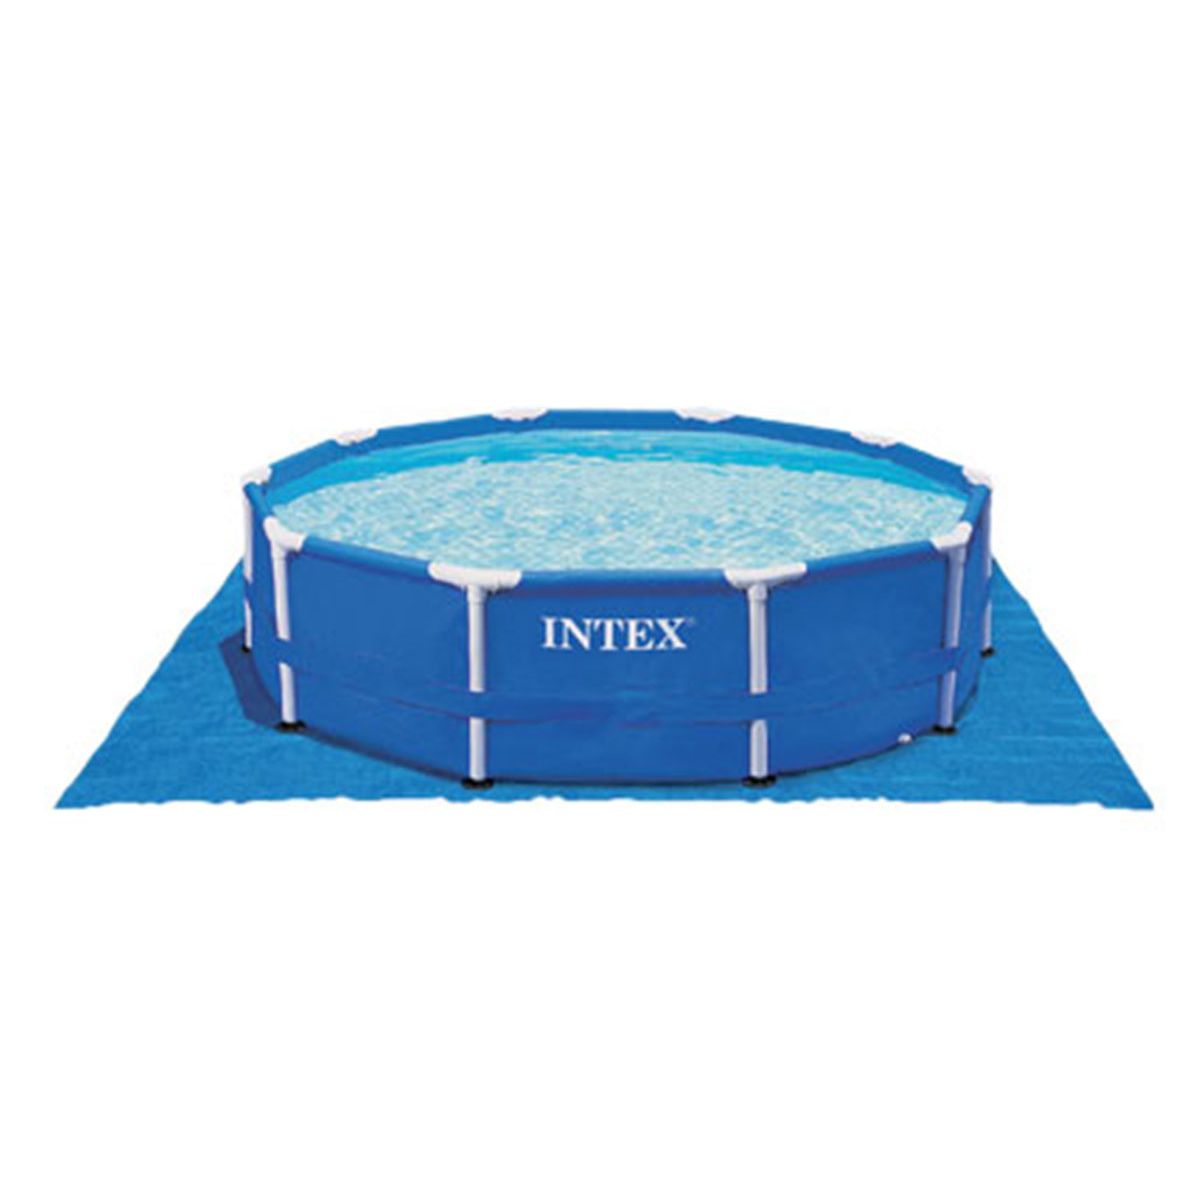 INTEX Tapis de sol pour piscine ronde Ø 5,49 m - Intex